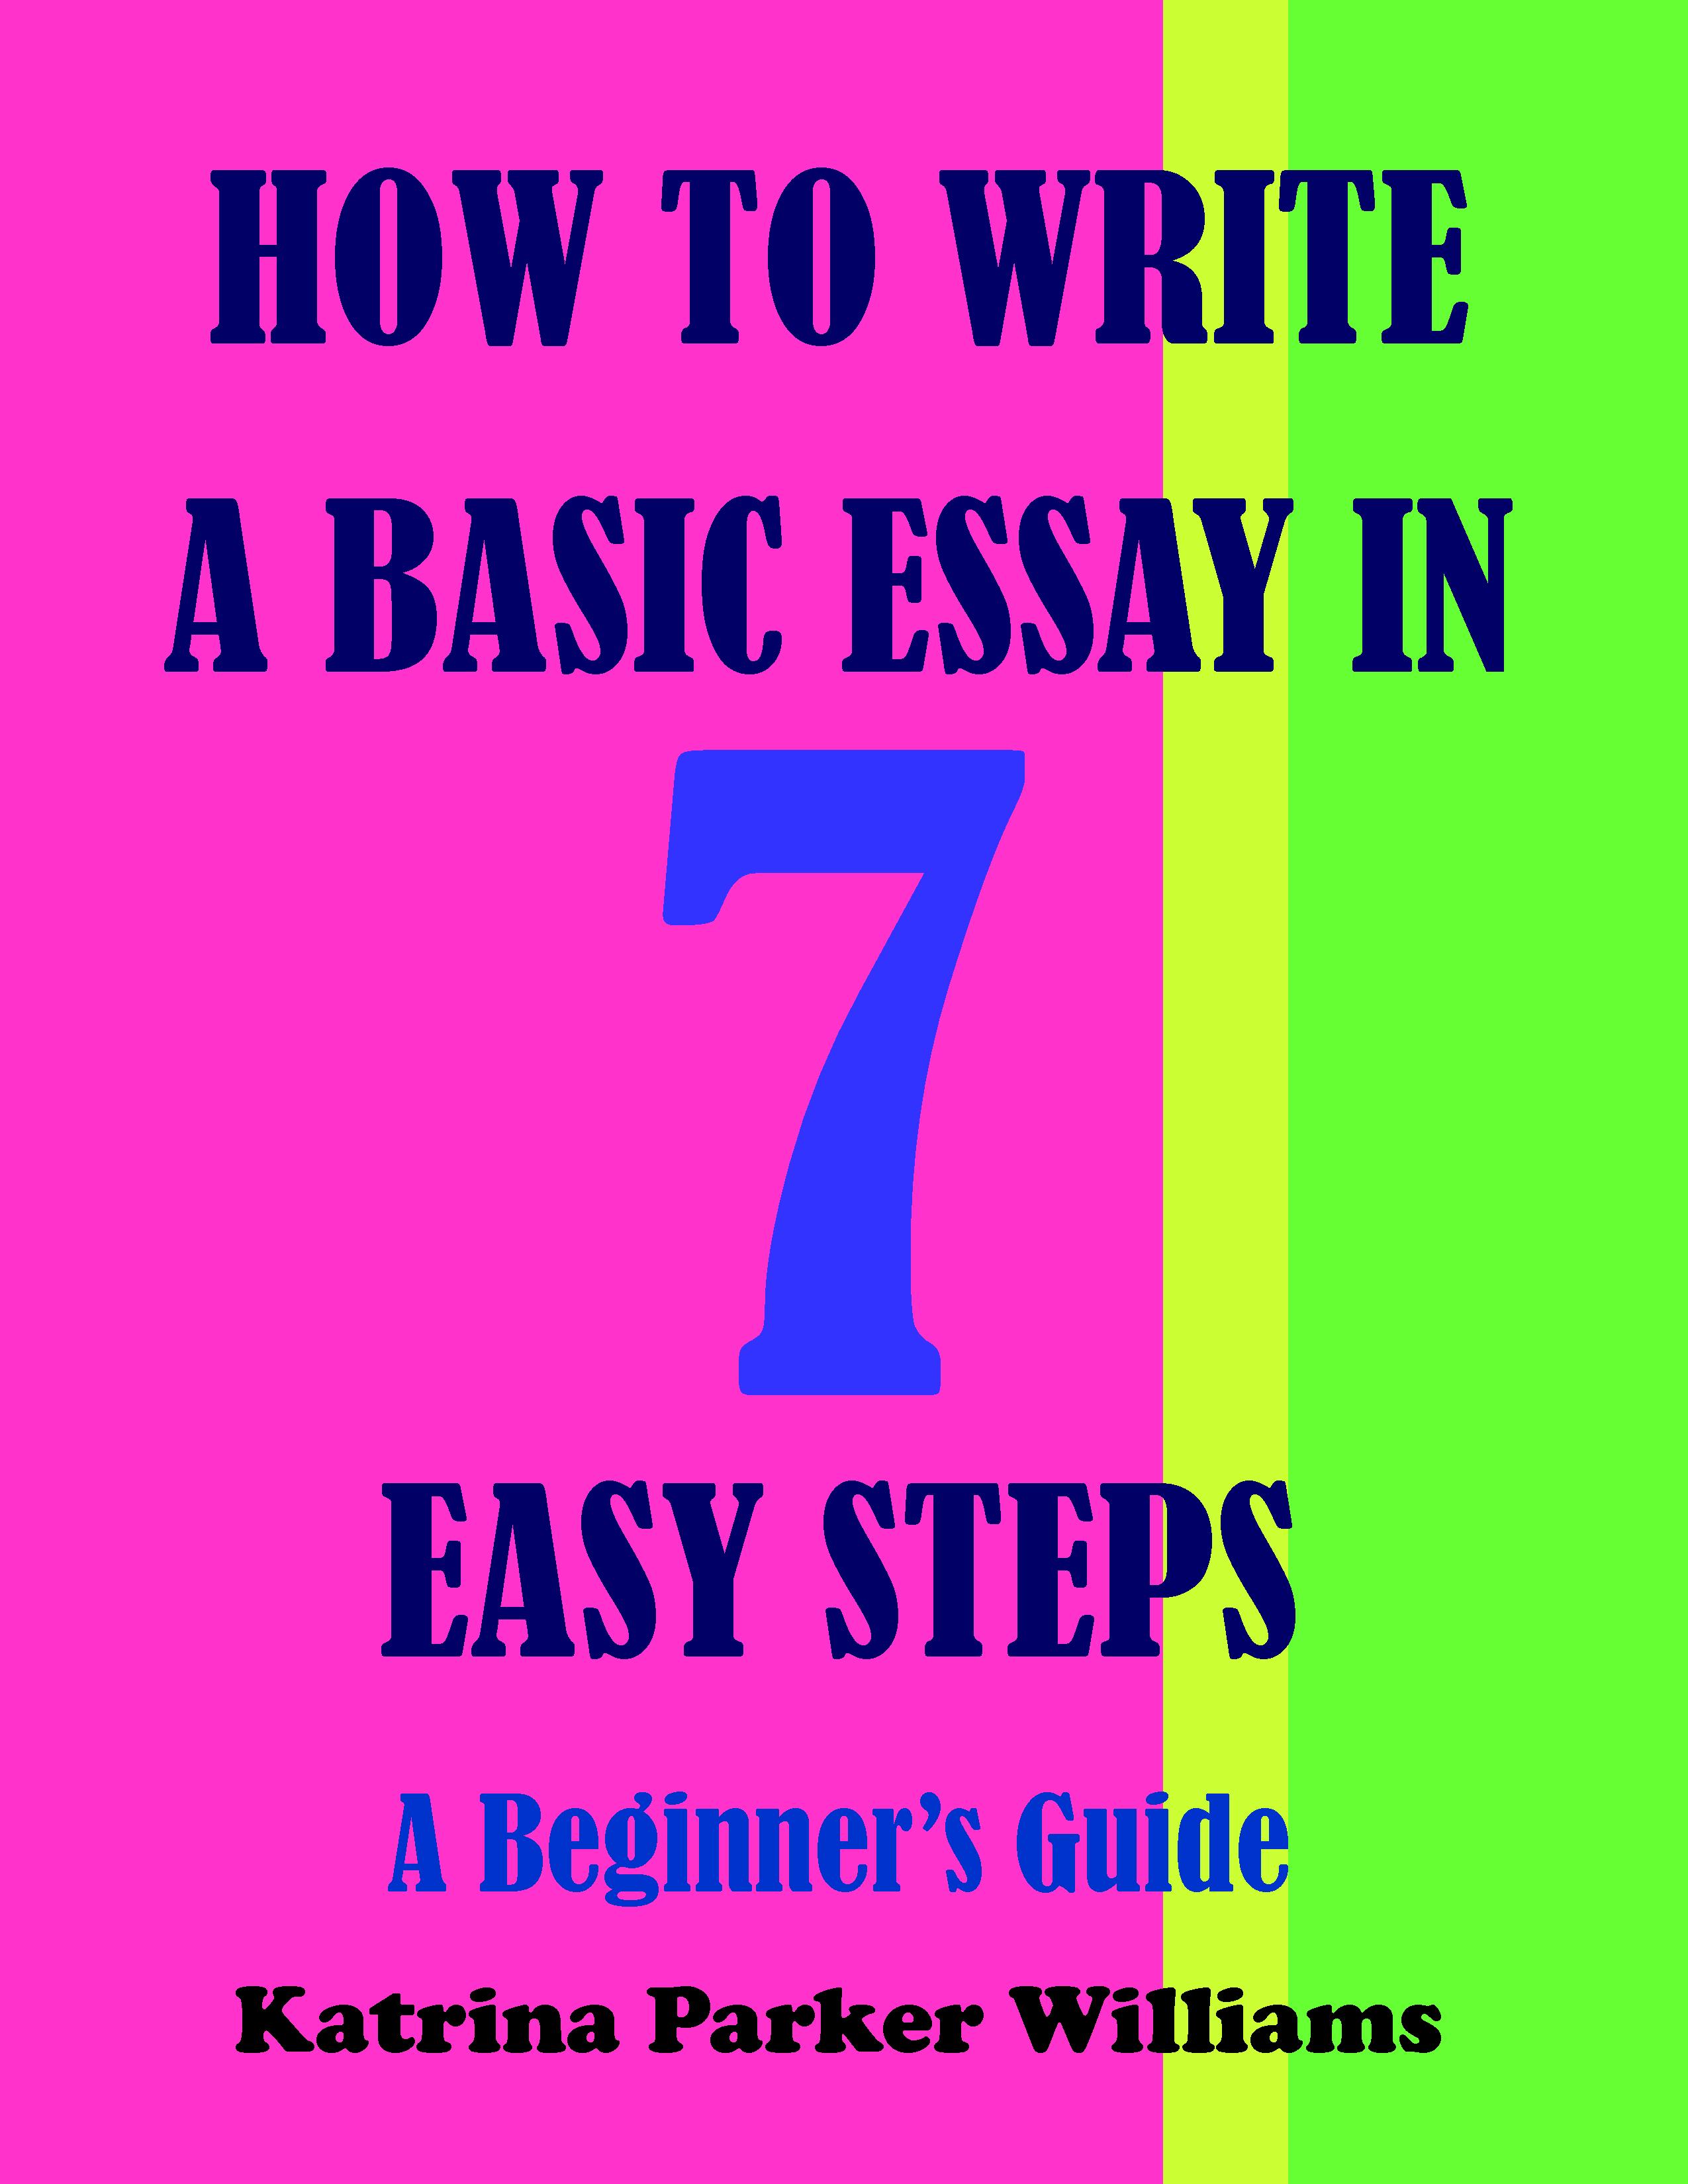 500-word essay writing tips